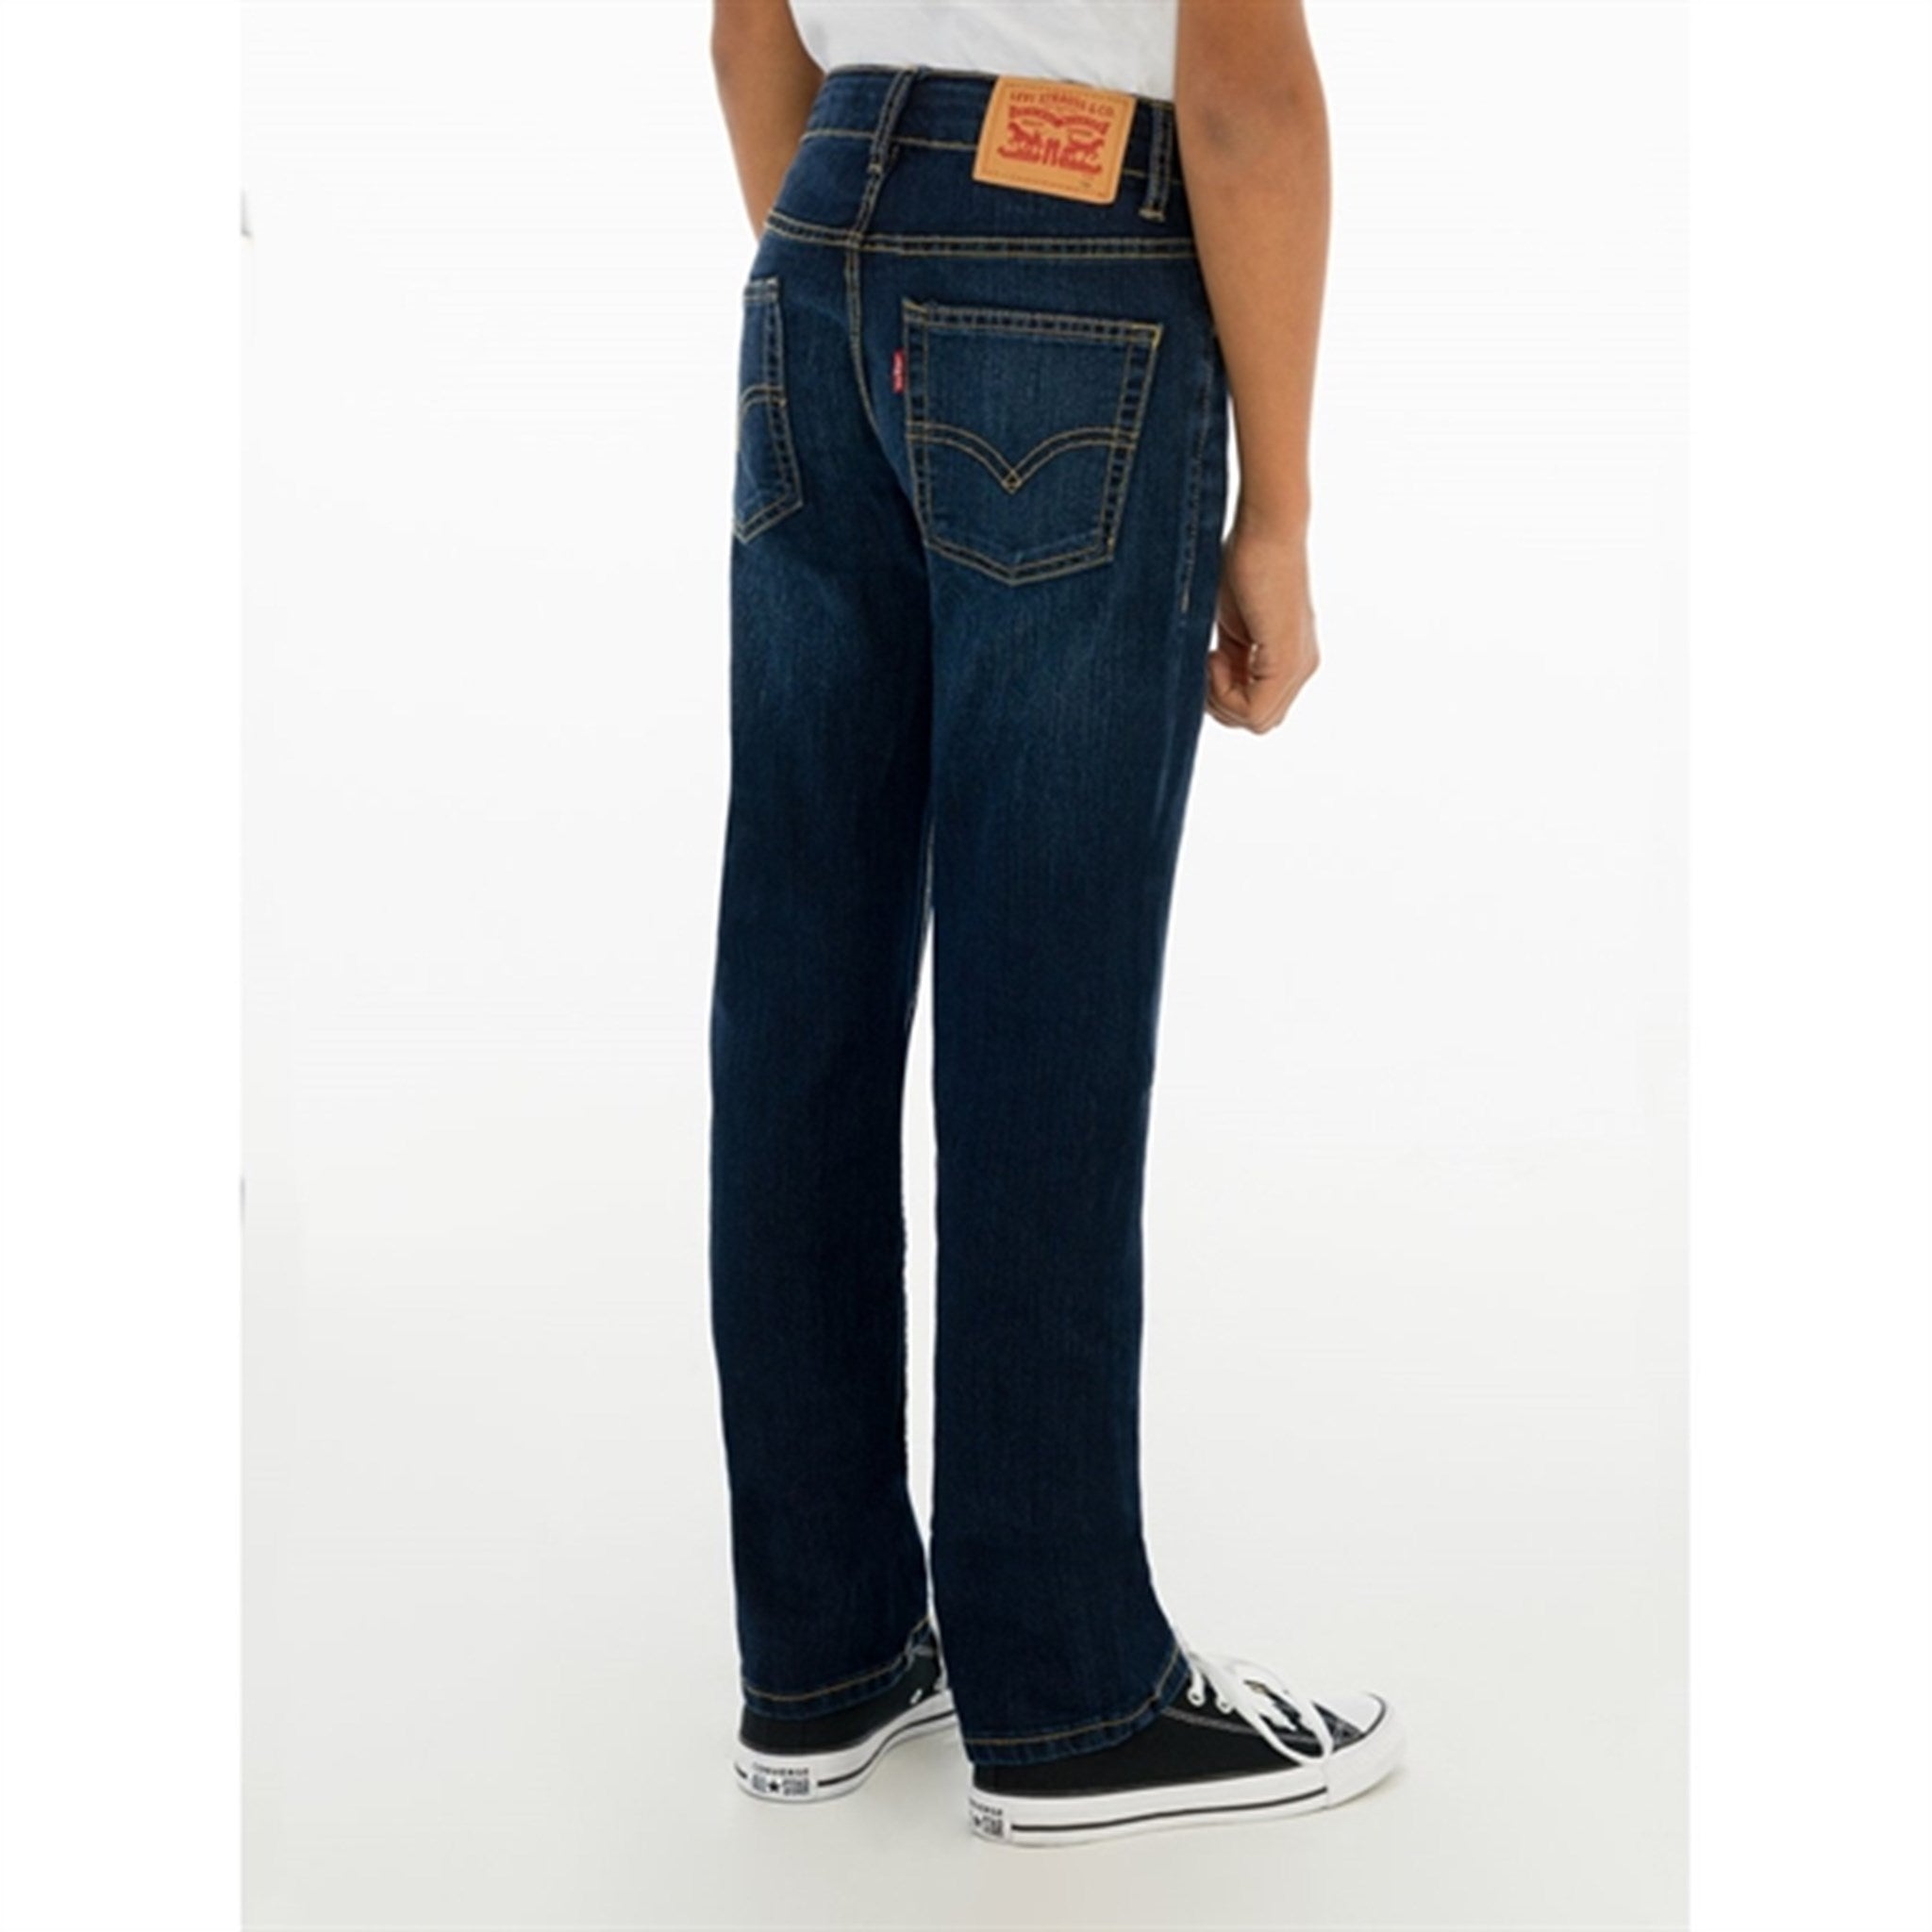 Levi's 511 Slim Fit Jeans Rushmore 6